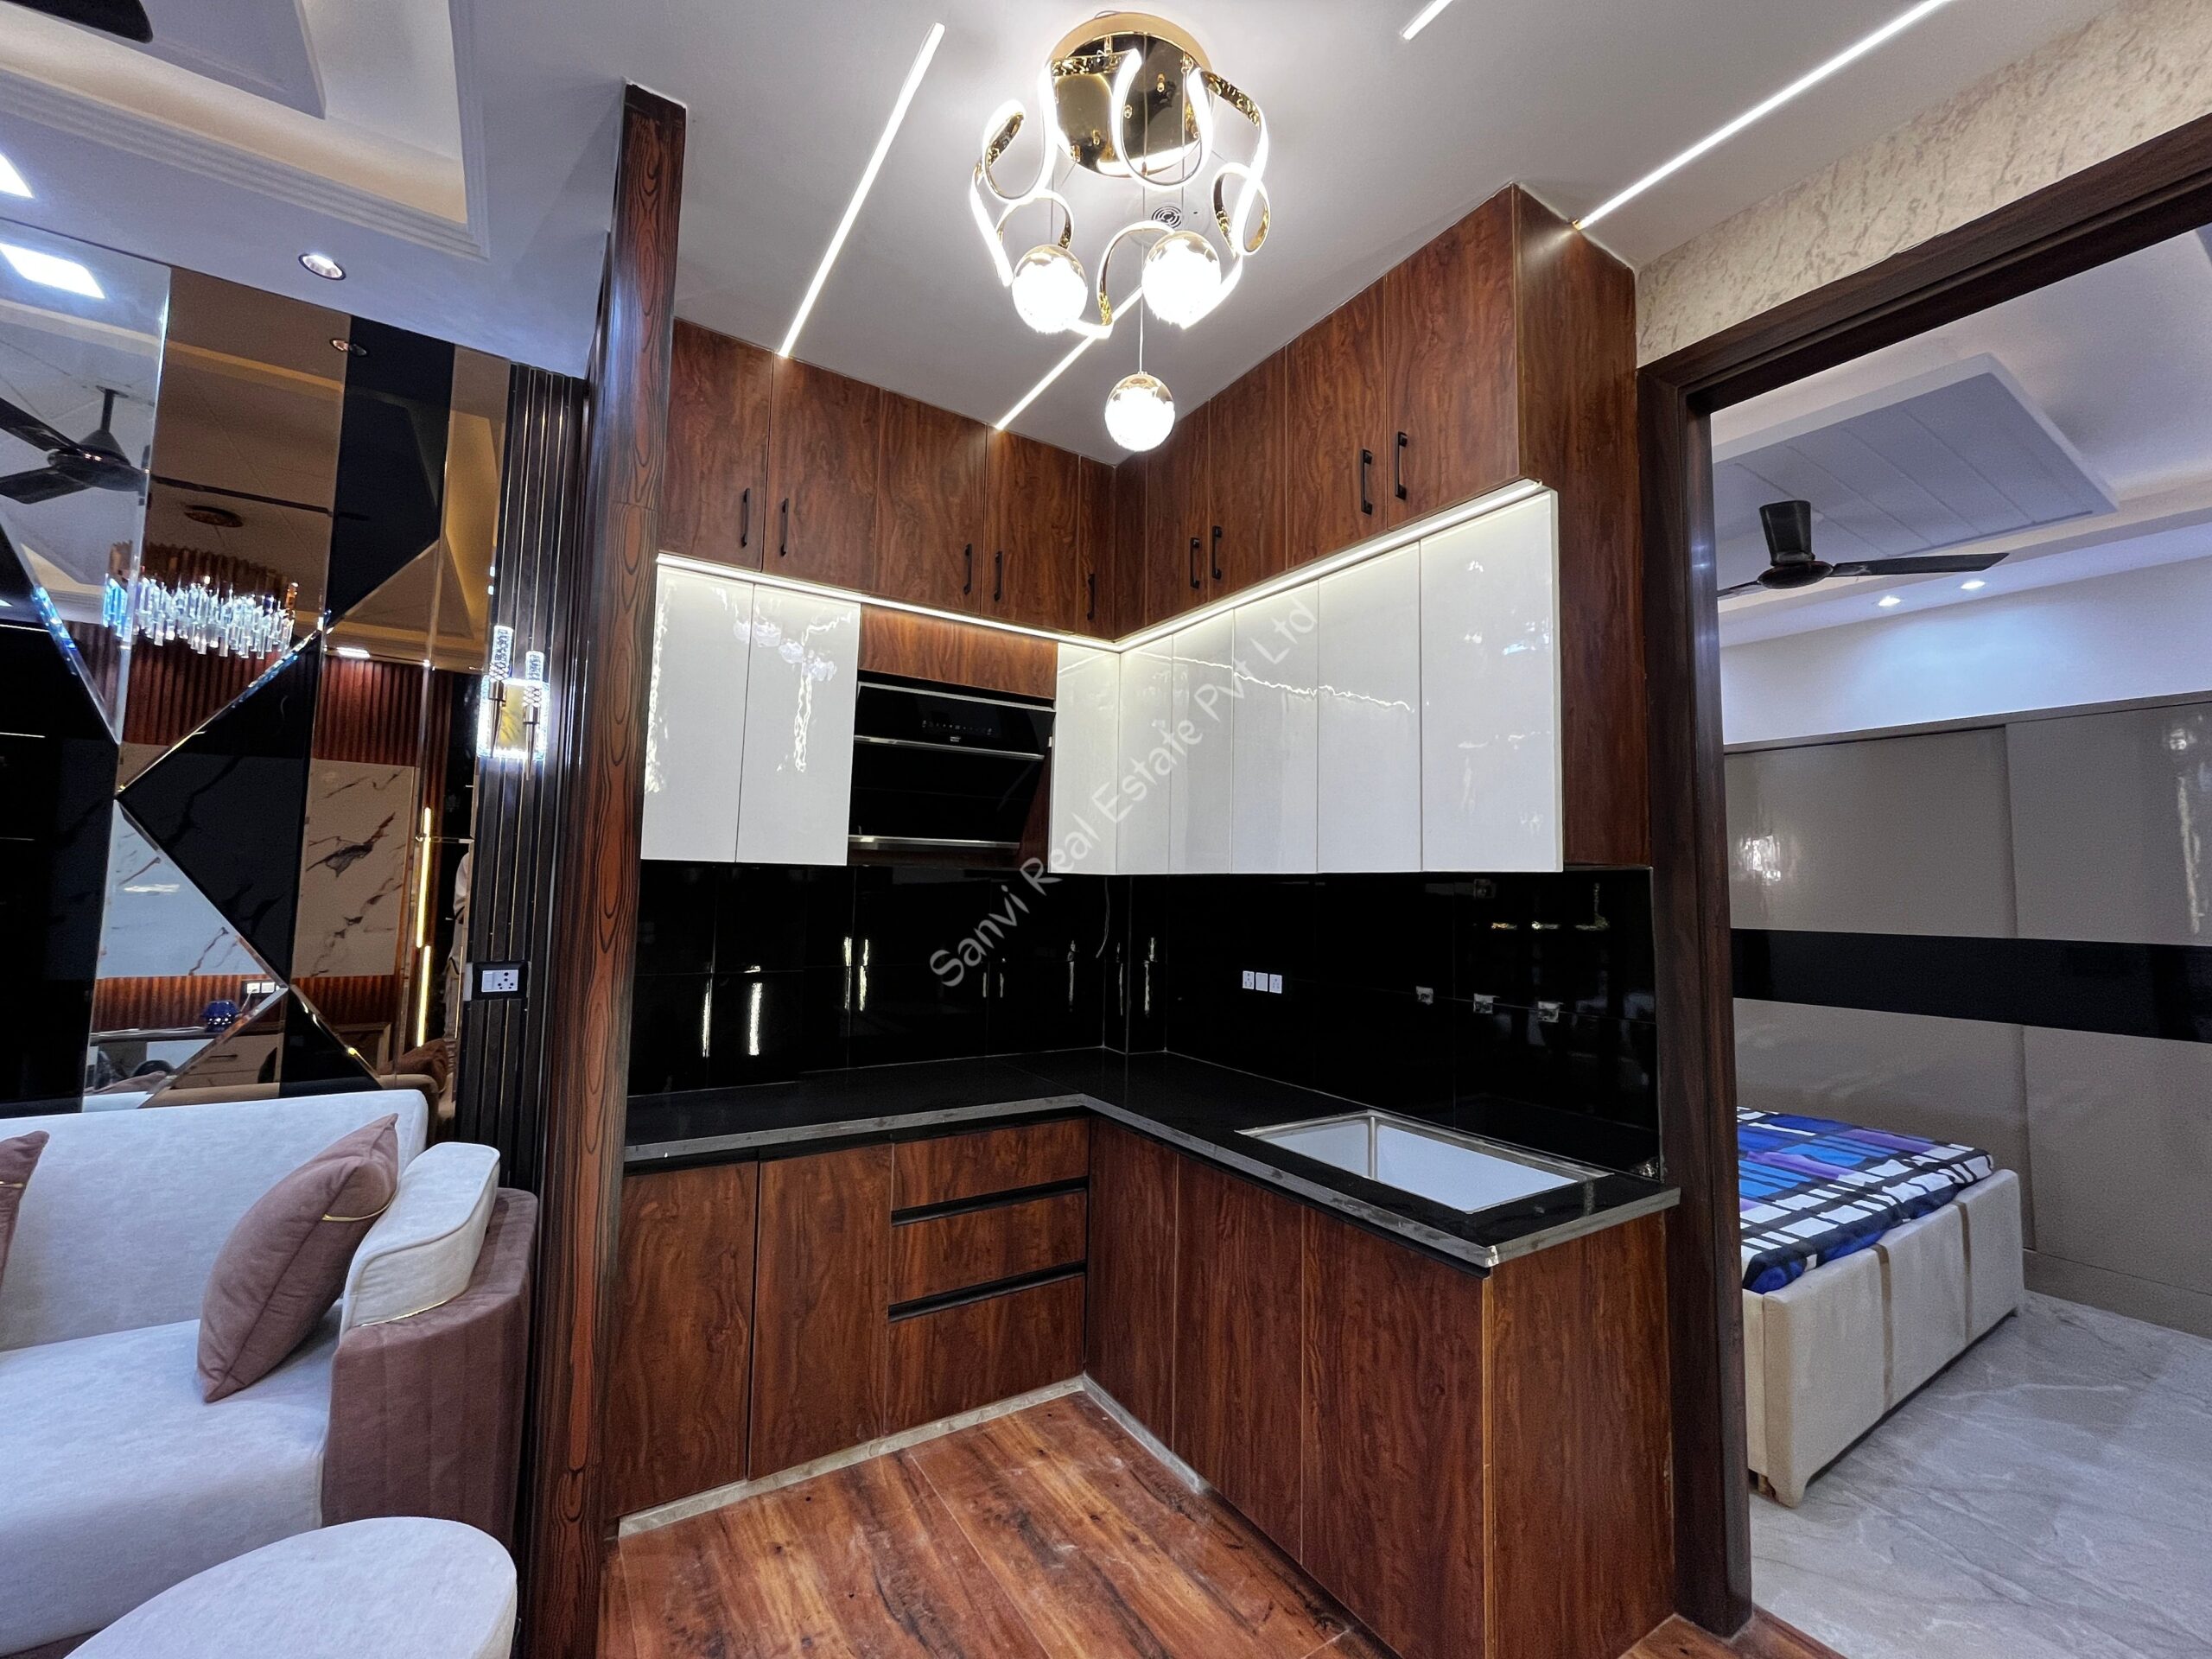 2 BHK Luxurious Property in Dwarka Mor, Delhi | Sanvi Real Estate